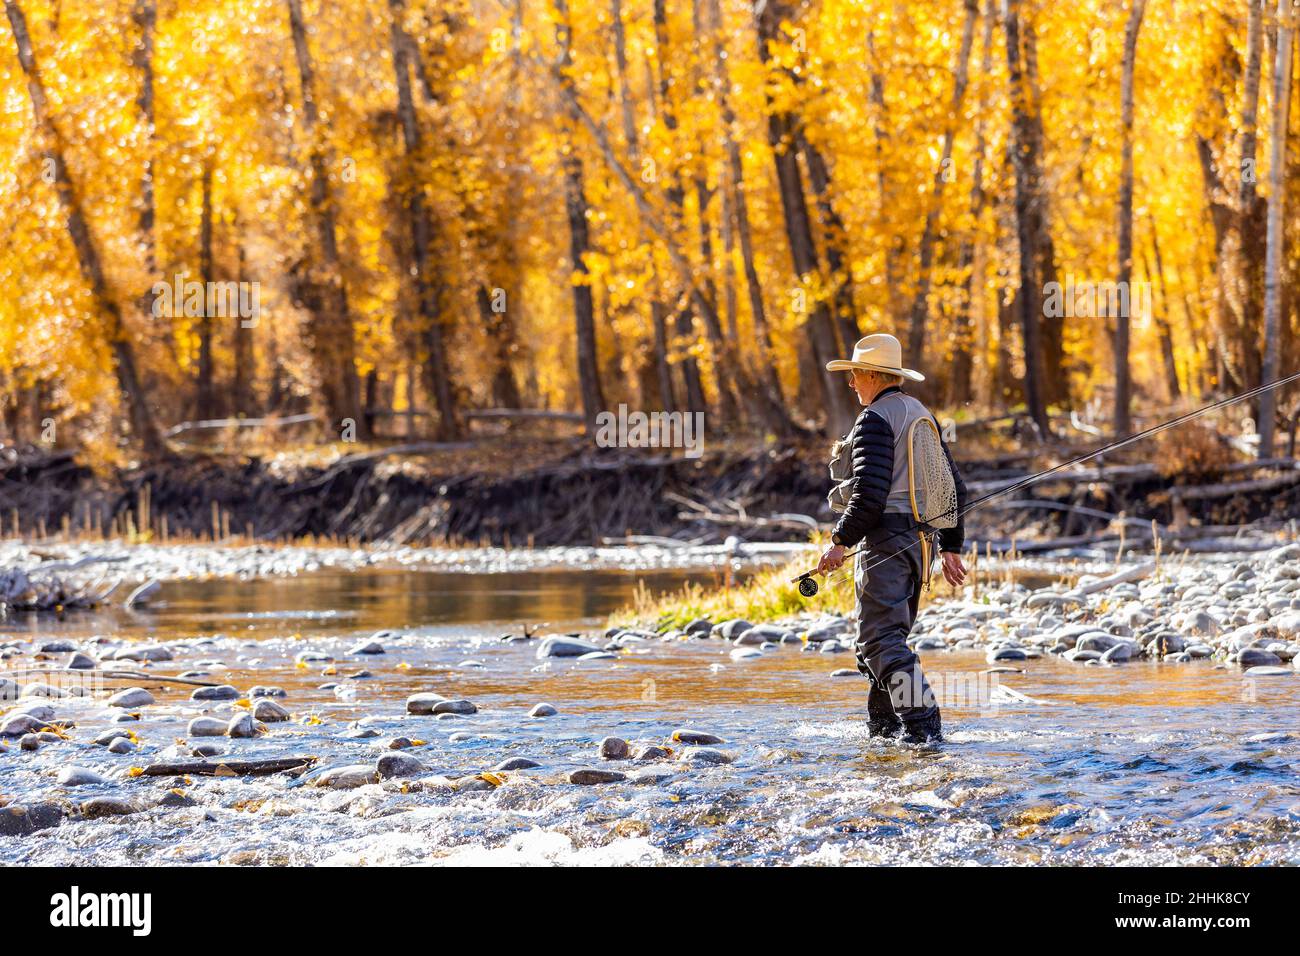 USA, Idaho, Bellevue, Senior fisherman wading in Big Wood River in Autumn Stock Photo